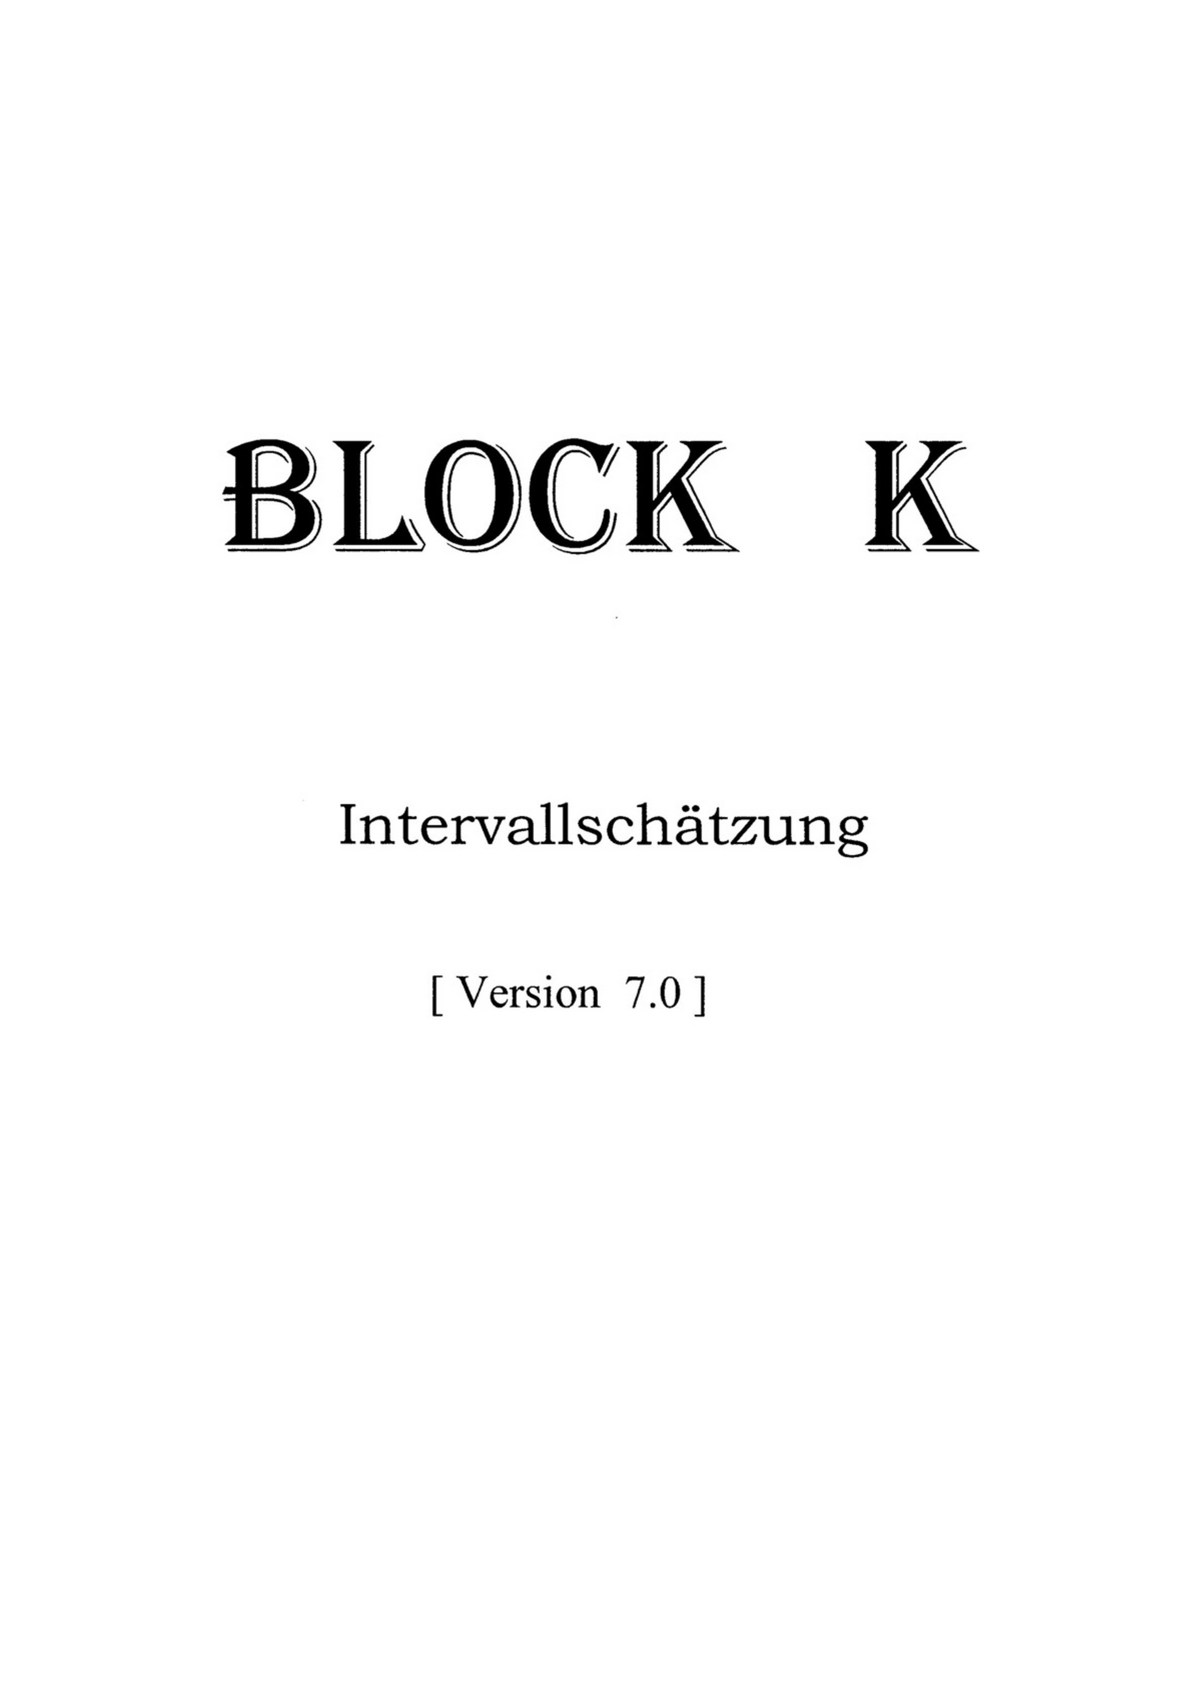 Block K Los Wintersemester Losungen Studocu